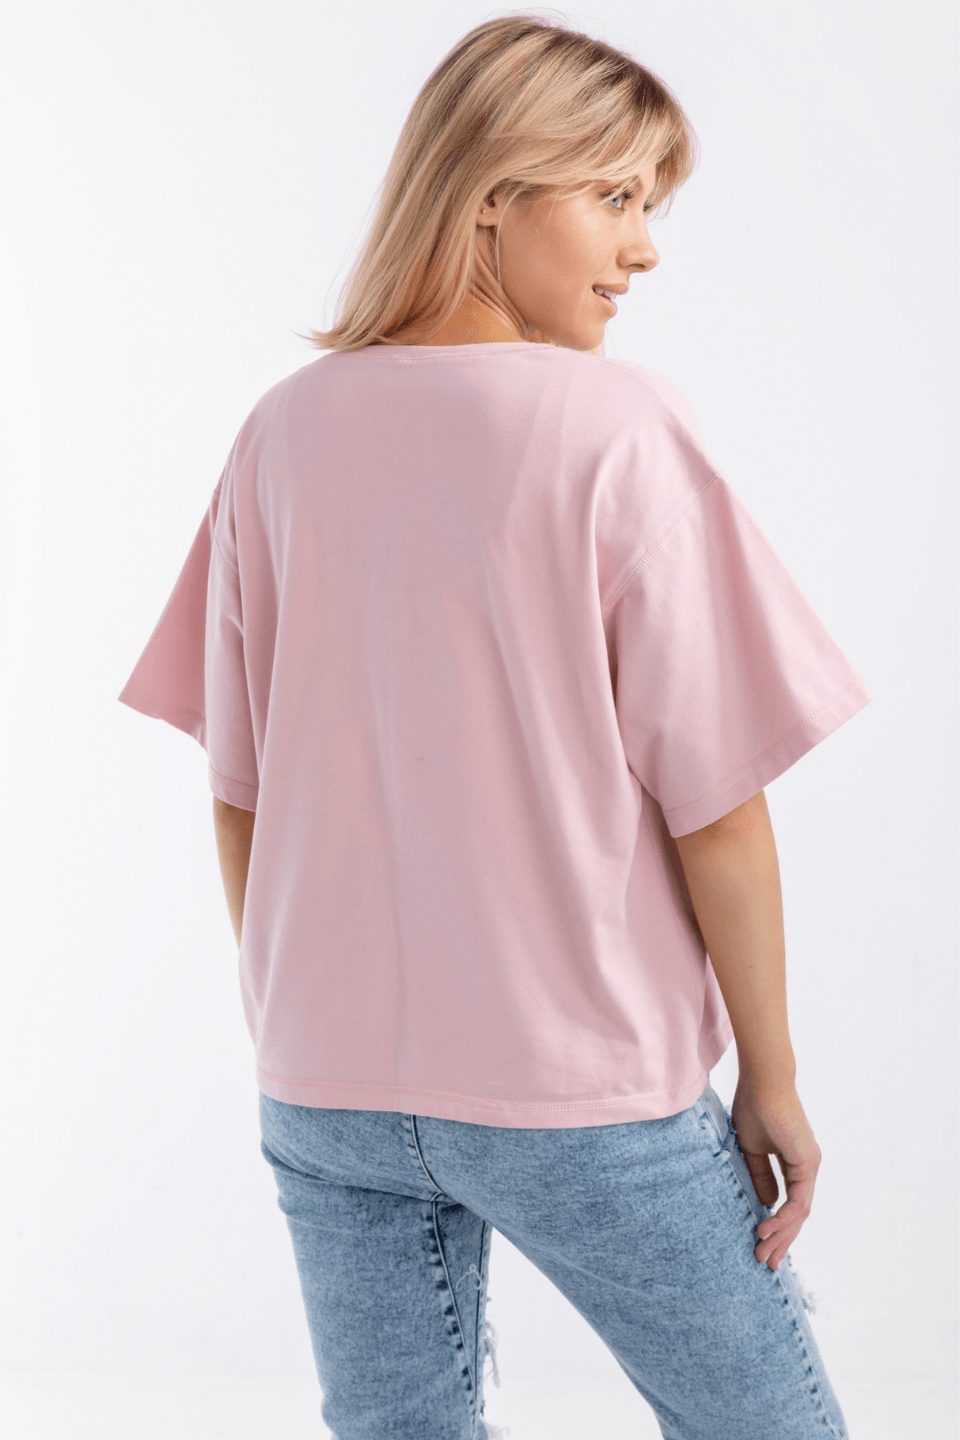 T-shirt oversize THANK YOU - różowy - Chiara Wear